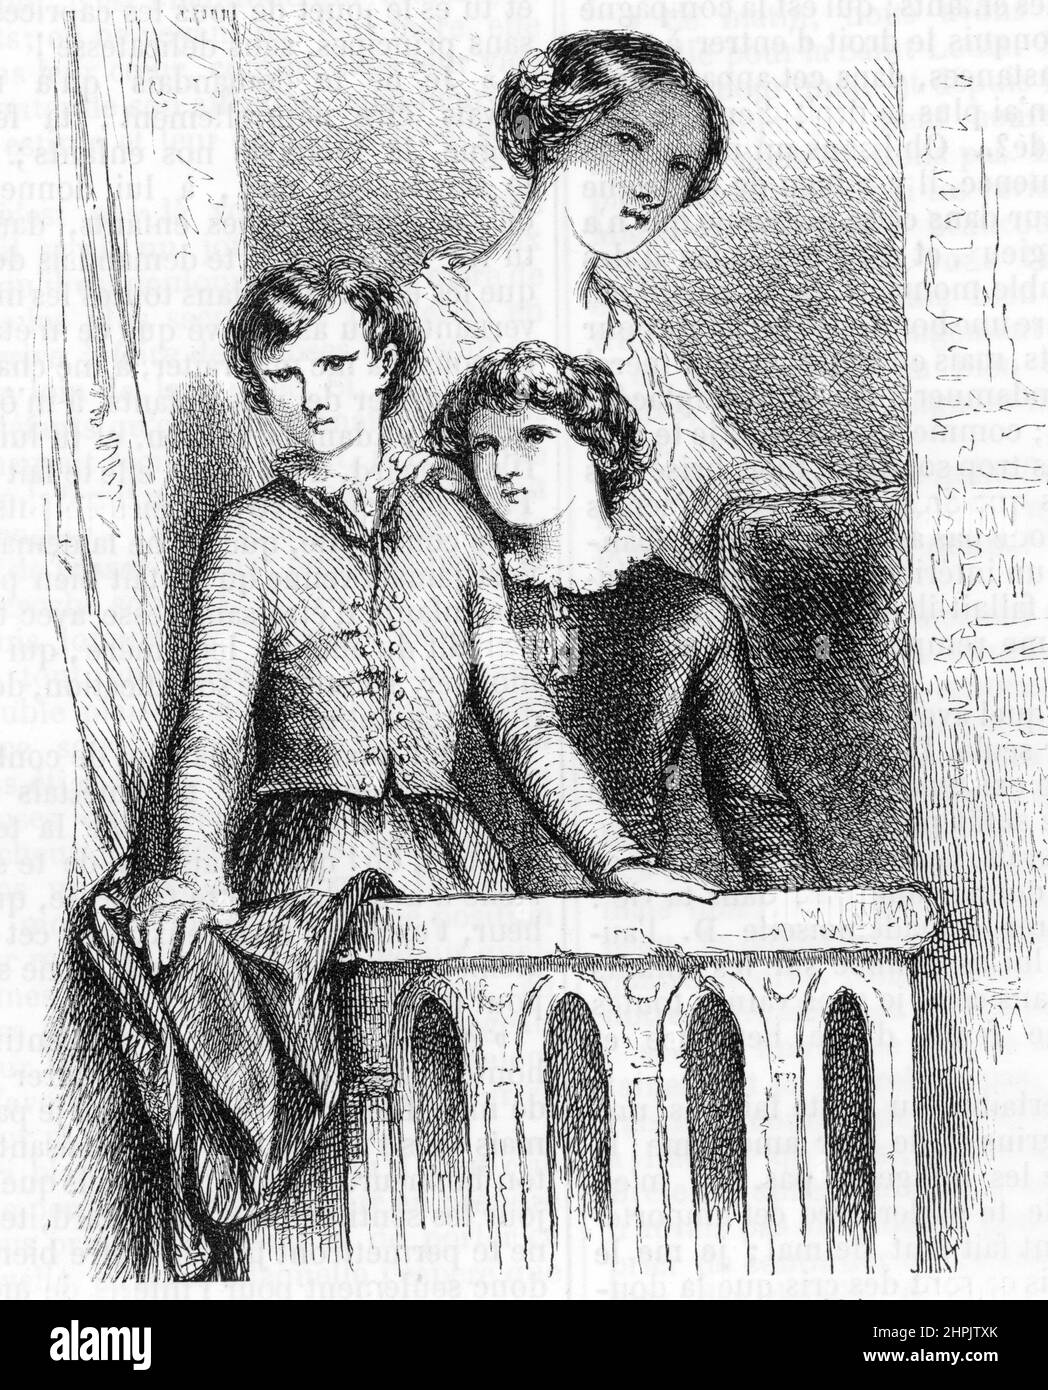 'La gouvernante Henriette Deluzy de Francoise, duchesse de Choiseul-Praslin (Choiseul Praslin) qui sera assassinee le 18 aout 1847, egorgee par son mari le duc de Praslin - celui ci etait suspecte d'entretenir une Relation avec la gouvernante' (Porträt der von Choiseuzy-Prascoise, von der Gouverneurin von Choi (Choiseul Praslin), die am 18. August 1847 ermordet und von ihrem Mann, dem Herzog von Praslin, ermordet wird - er wurde verdächtigt, eine Beziehung zur Gouvernante zu haben ) Gravure tyree de 'causes camebres de tous les peuples' de Fouquier 1858 Collection prive Stockfoto